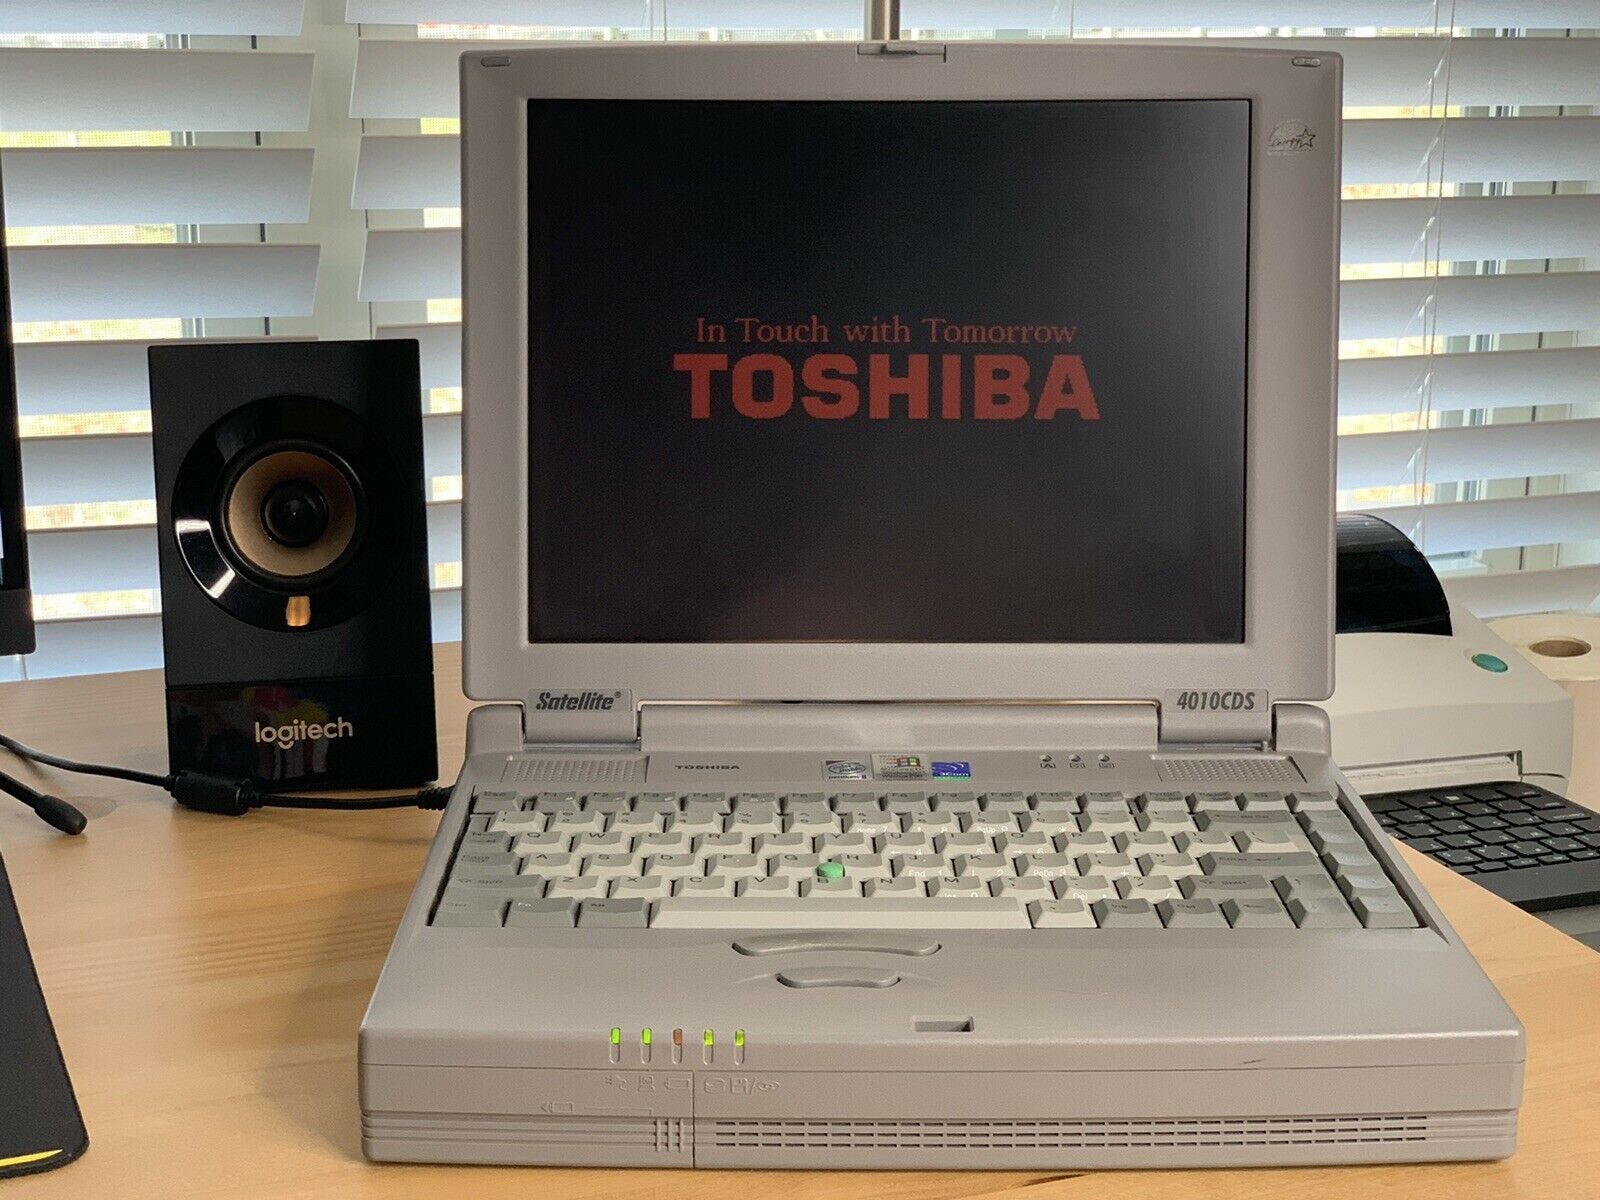   Toshiba Satellite 4010CDS